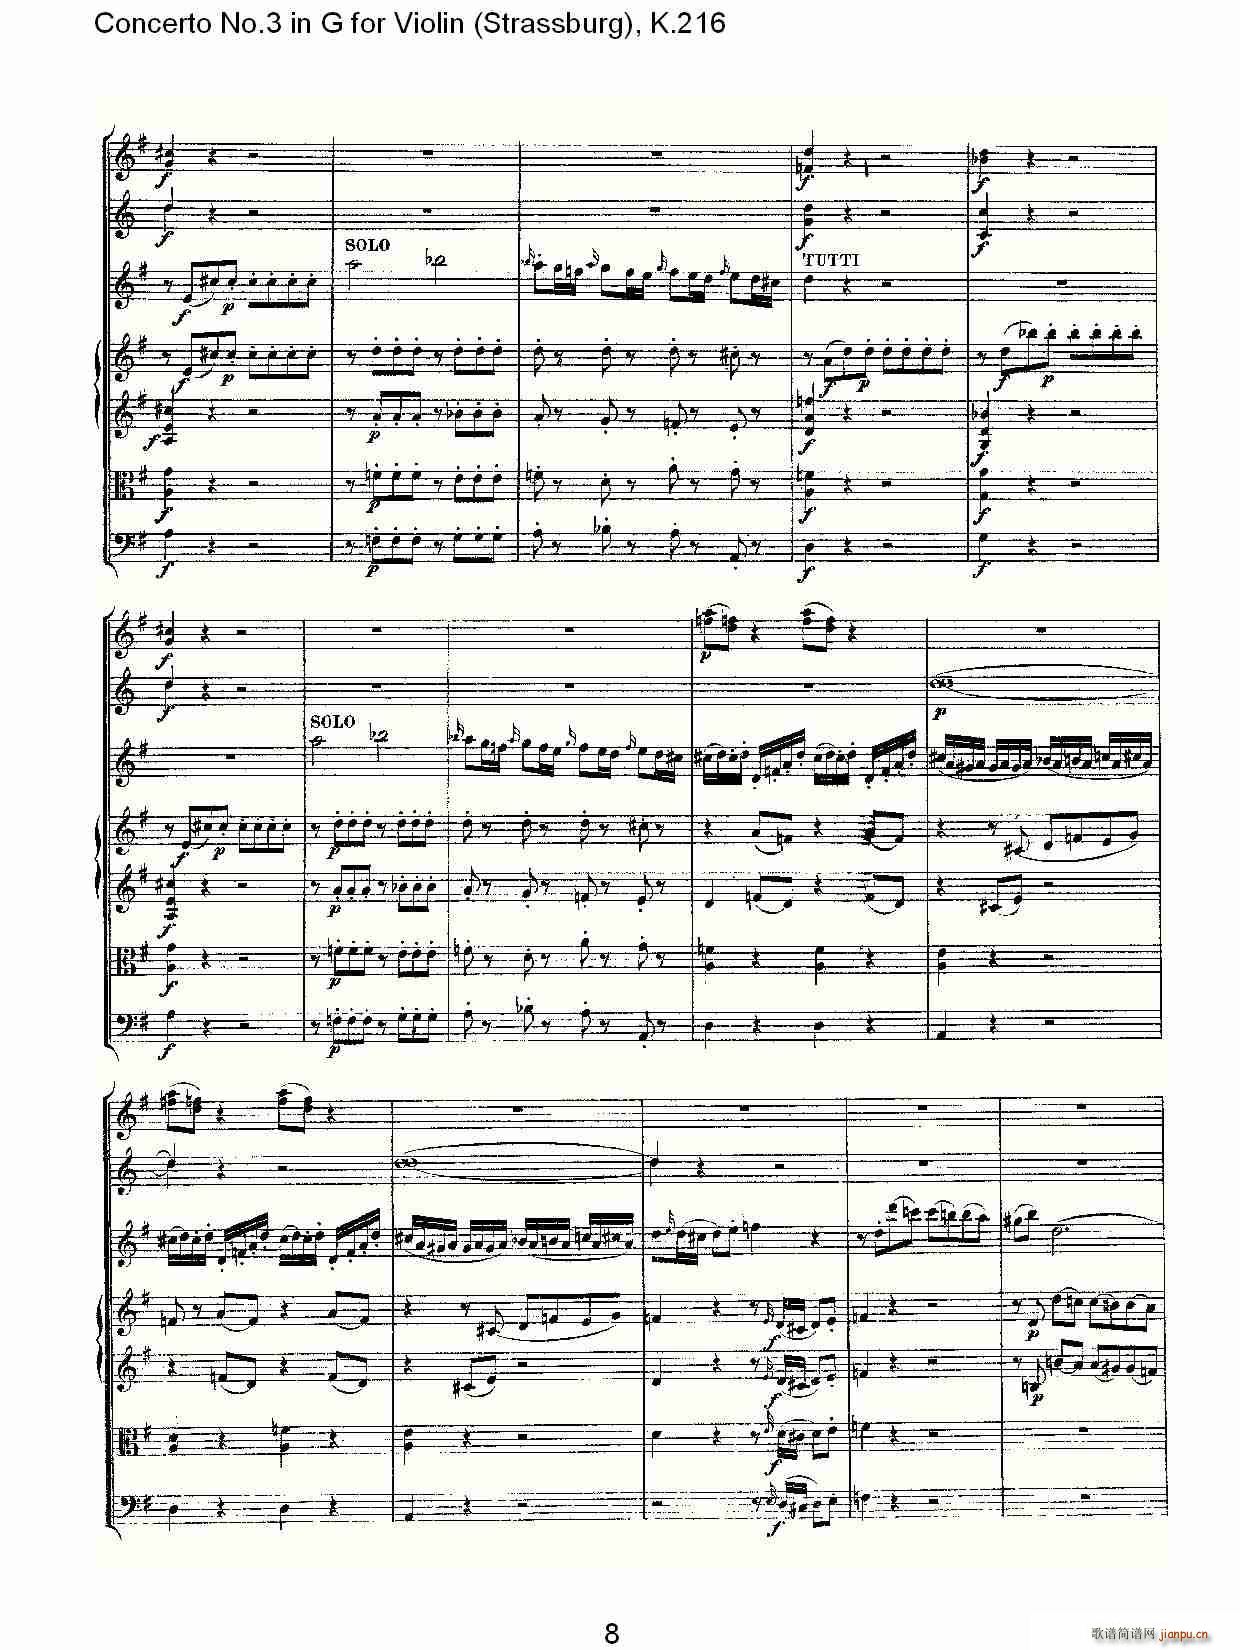 Concerto No.3 in G for Violin K.216(С)8